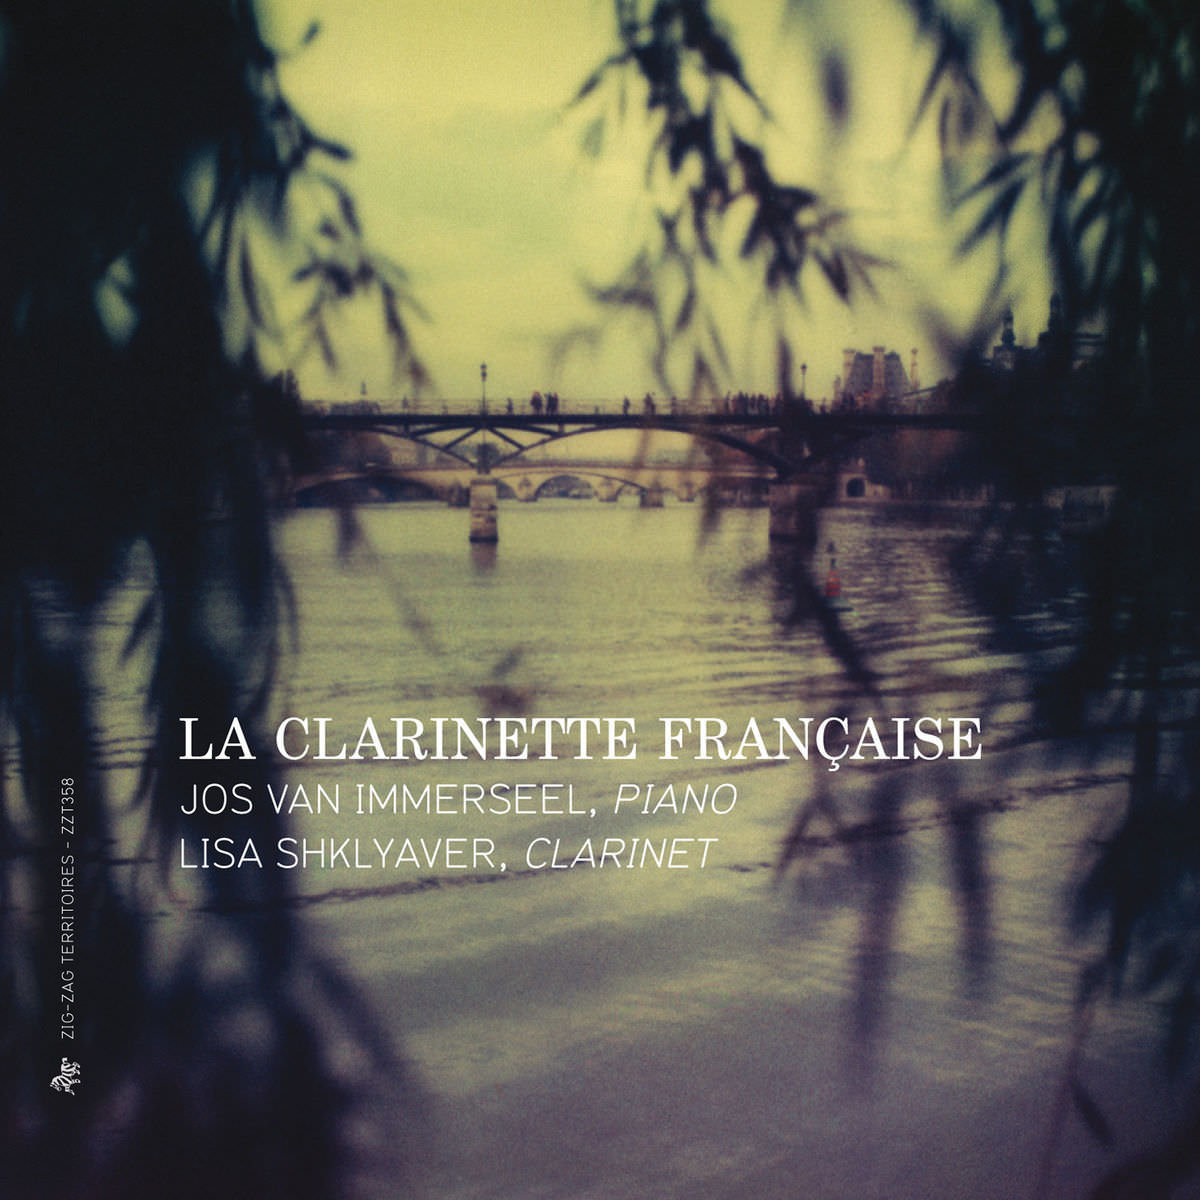 Lisa Shklyaver & Jos van Immerseel - La clarinette francaise (2015) [FLAC 24bit/96kHz]